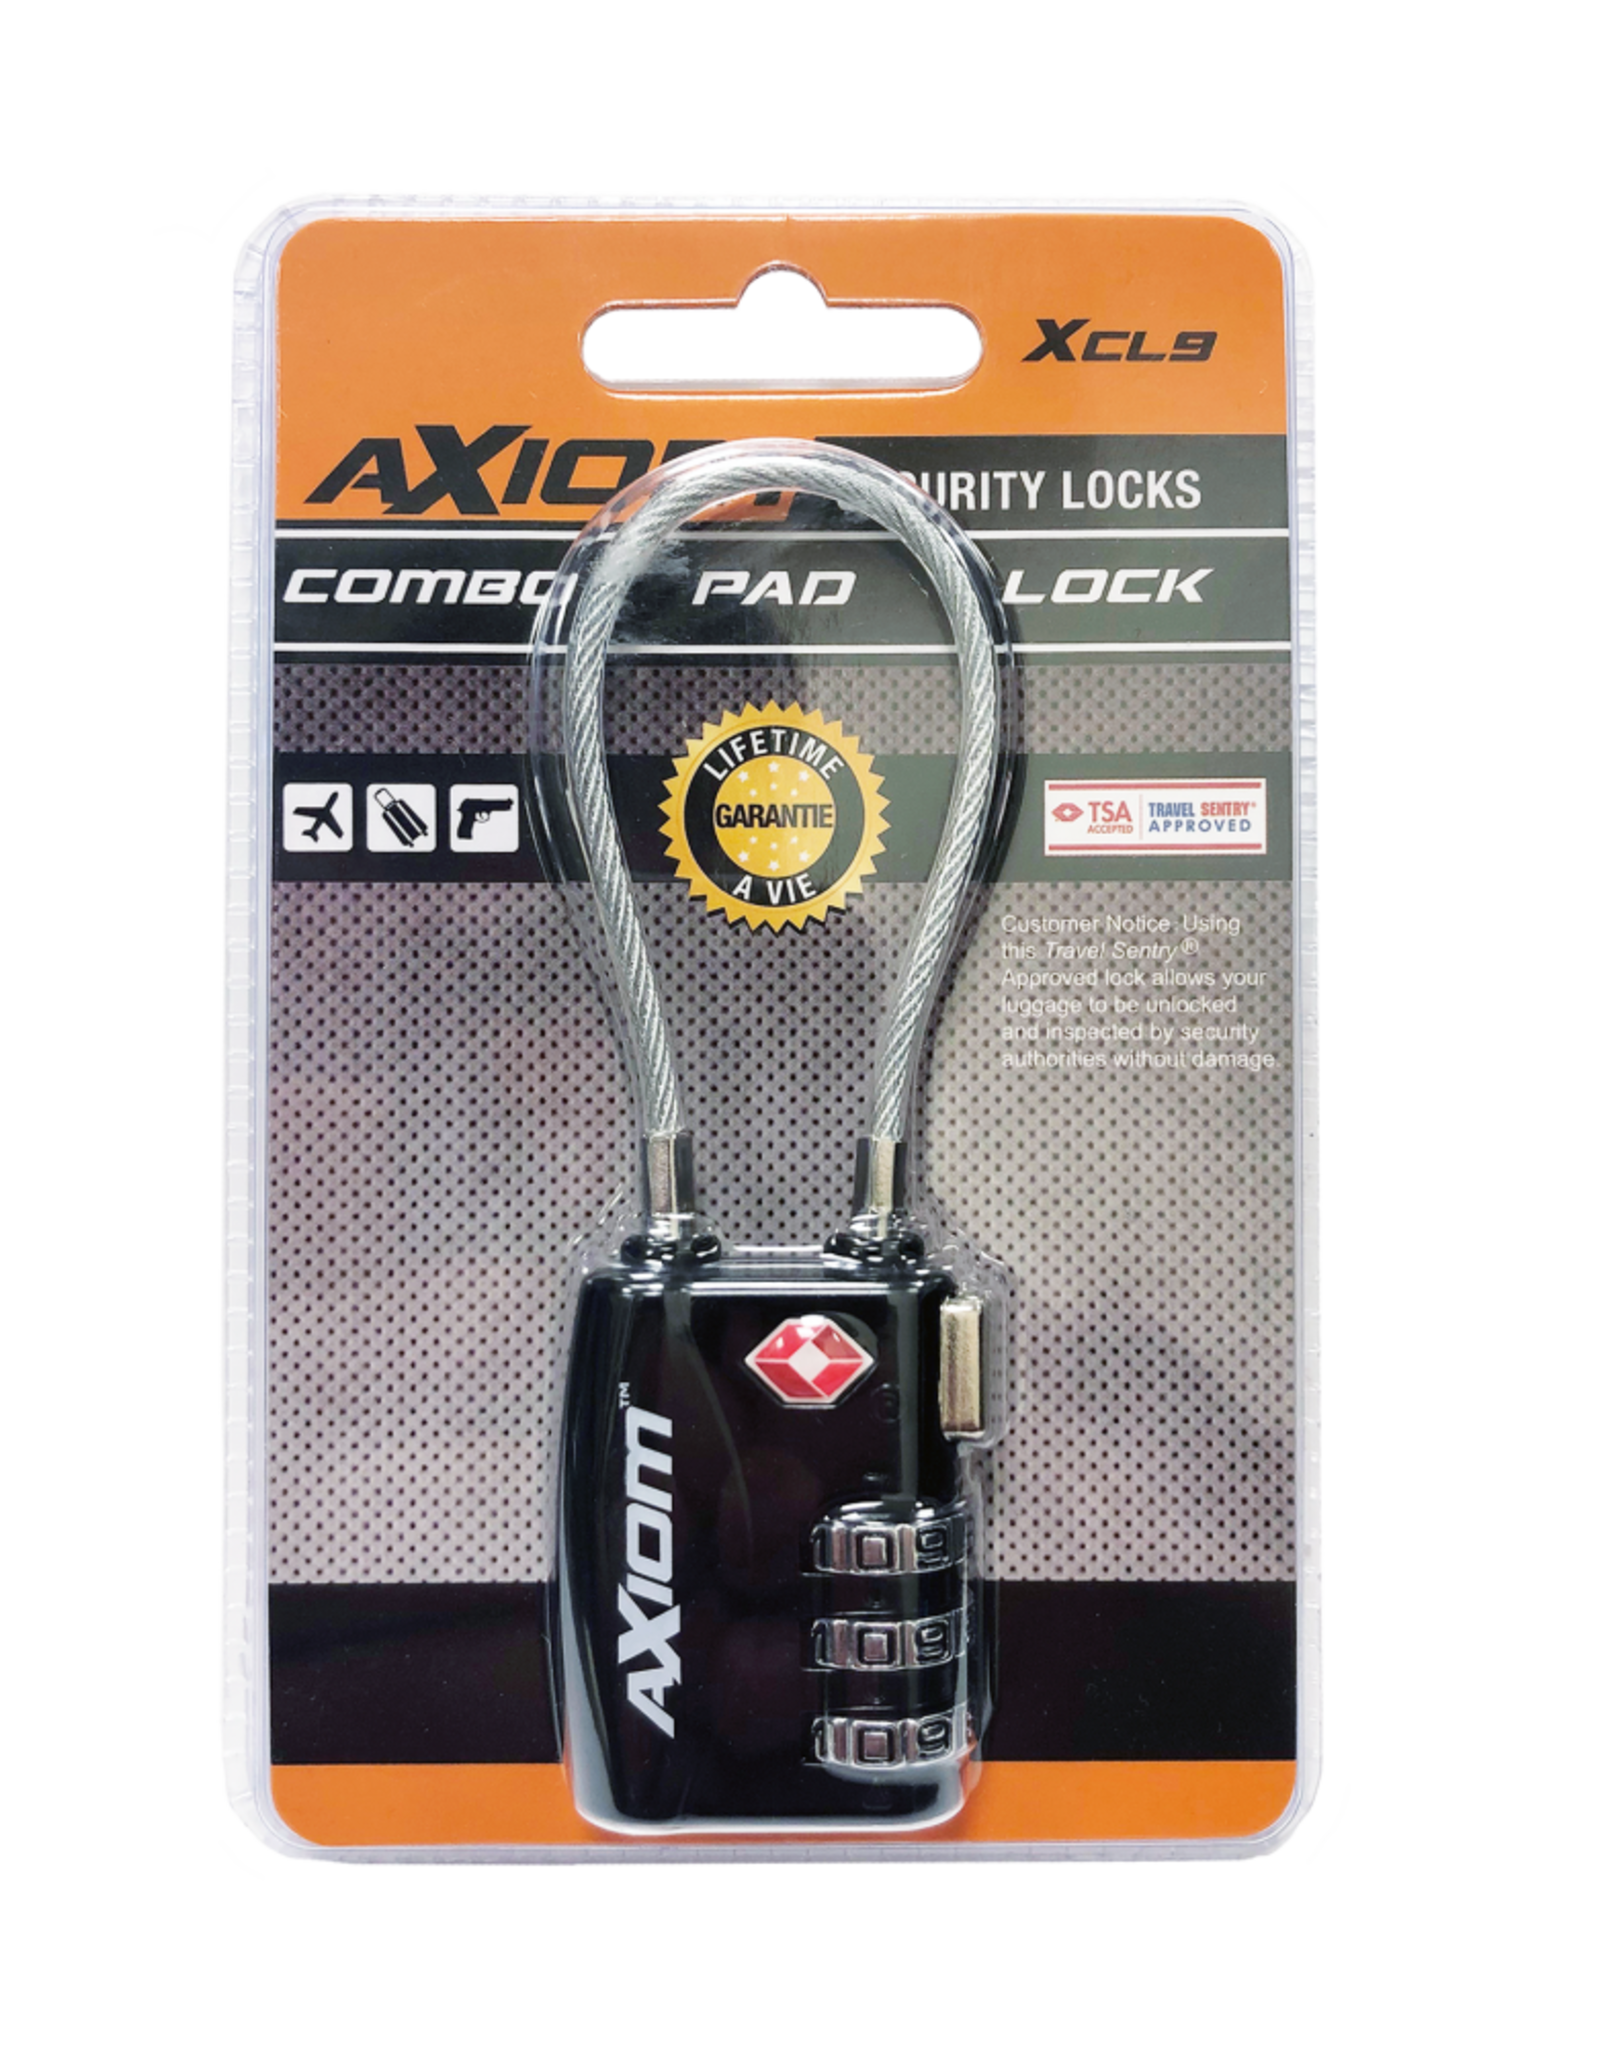 Axiom Axiom Combination Cable Lock  XCL9